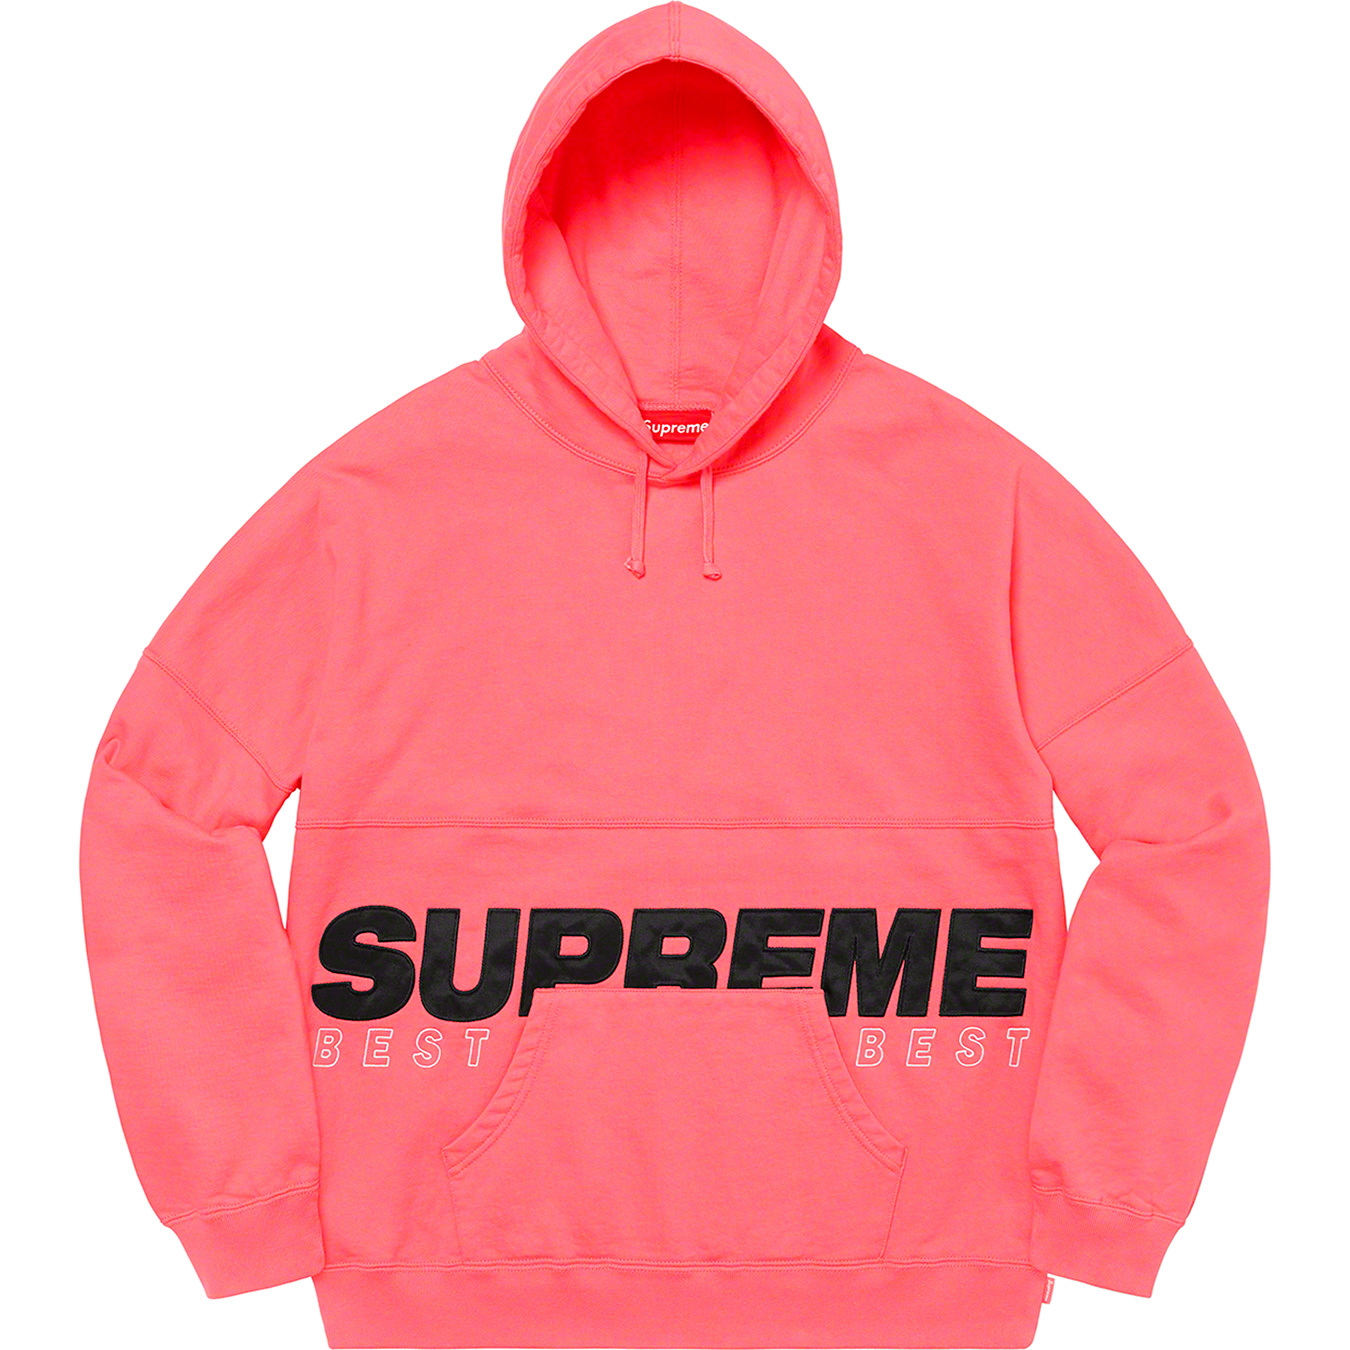 Best Of The Best Hooded Sweatshirt | Supreme 20fw